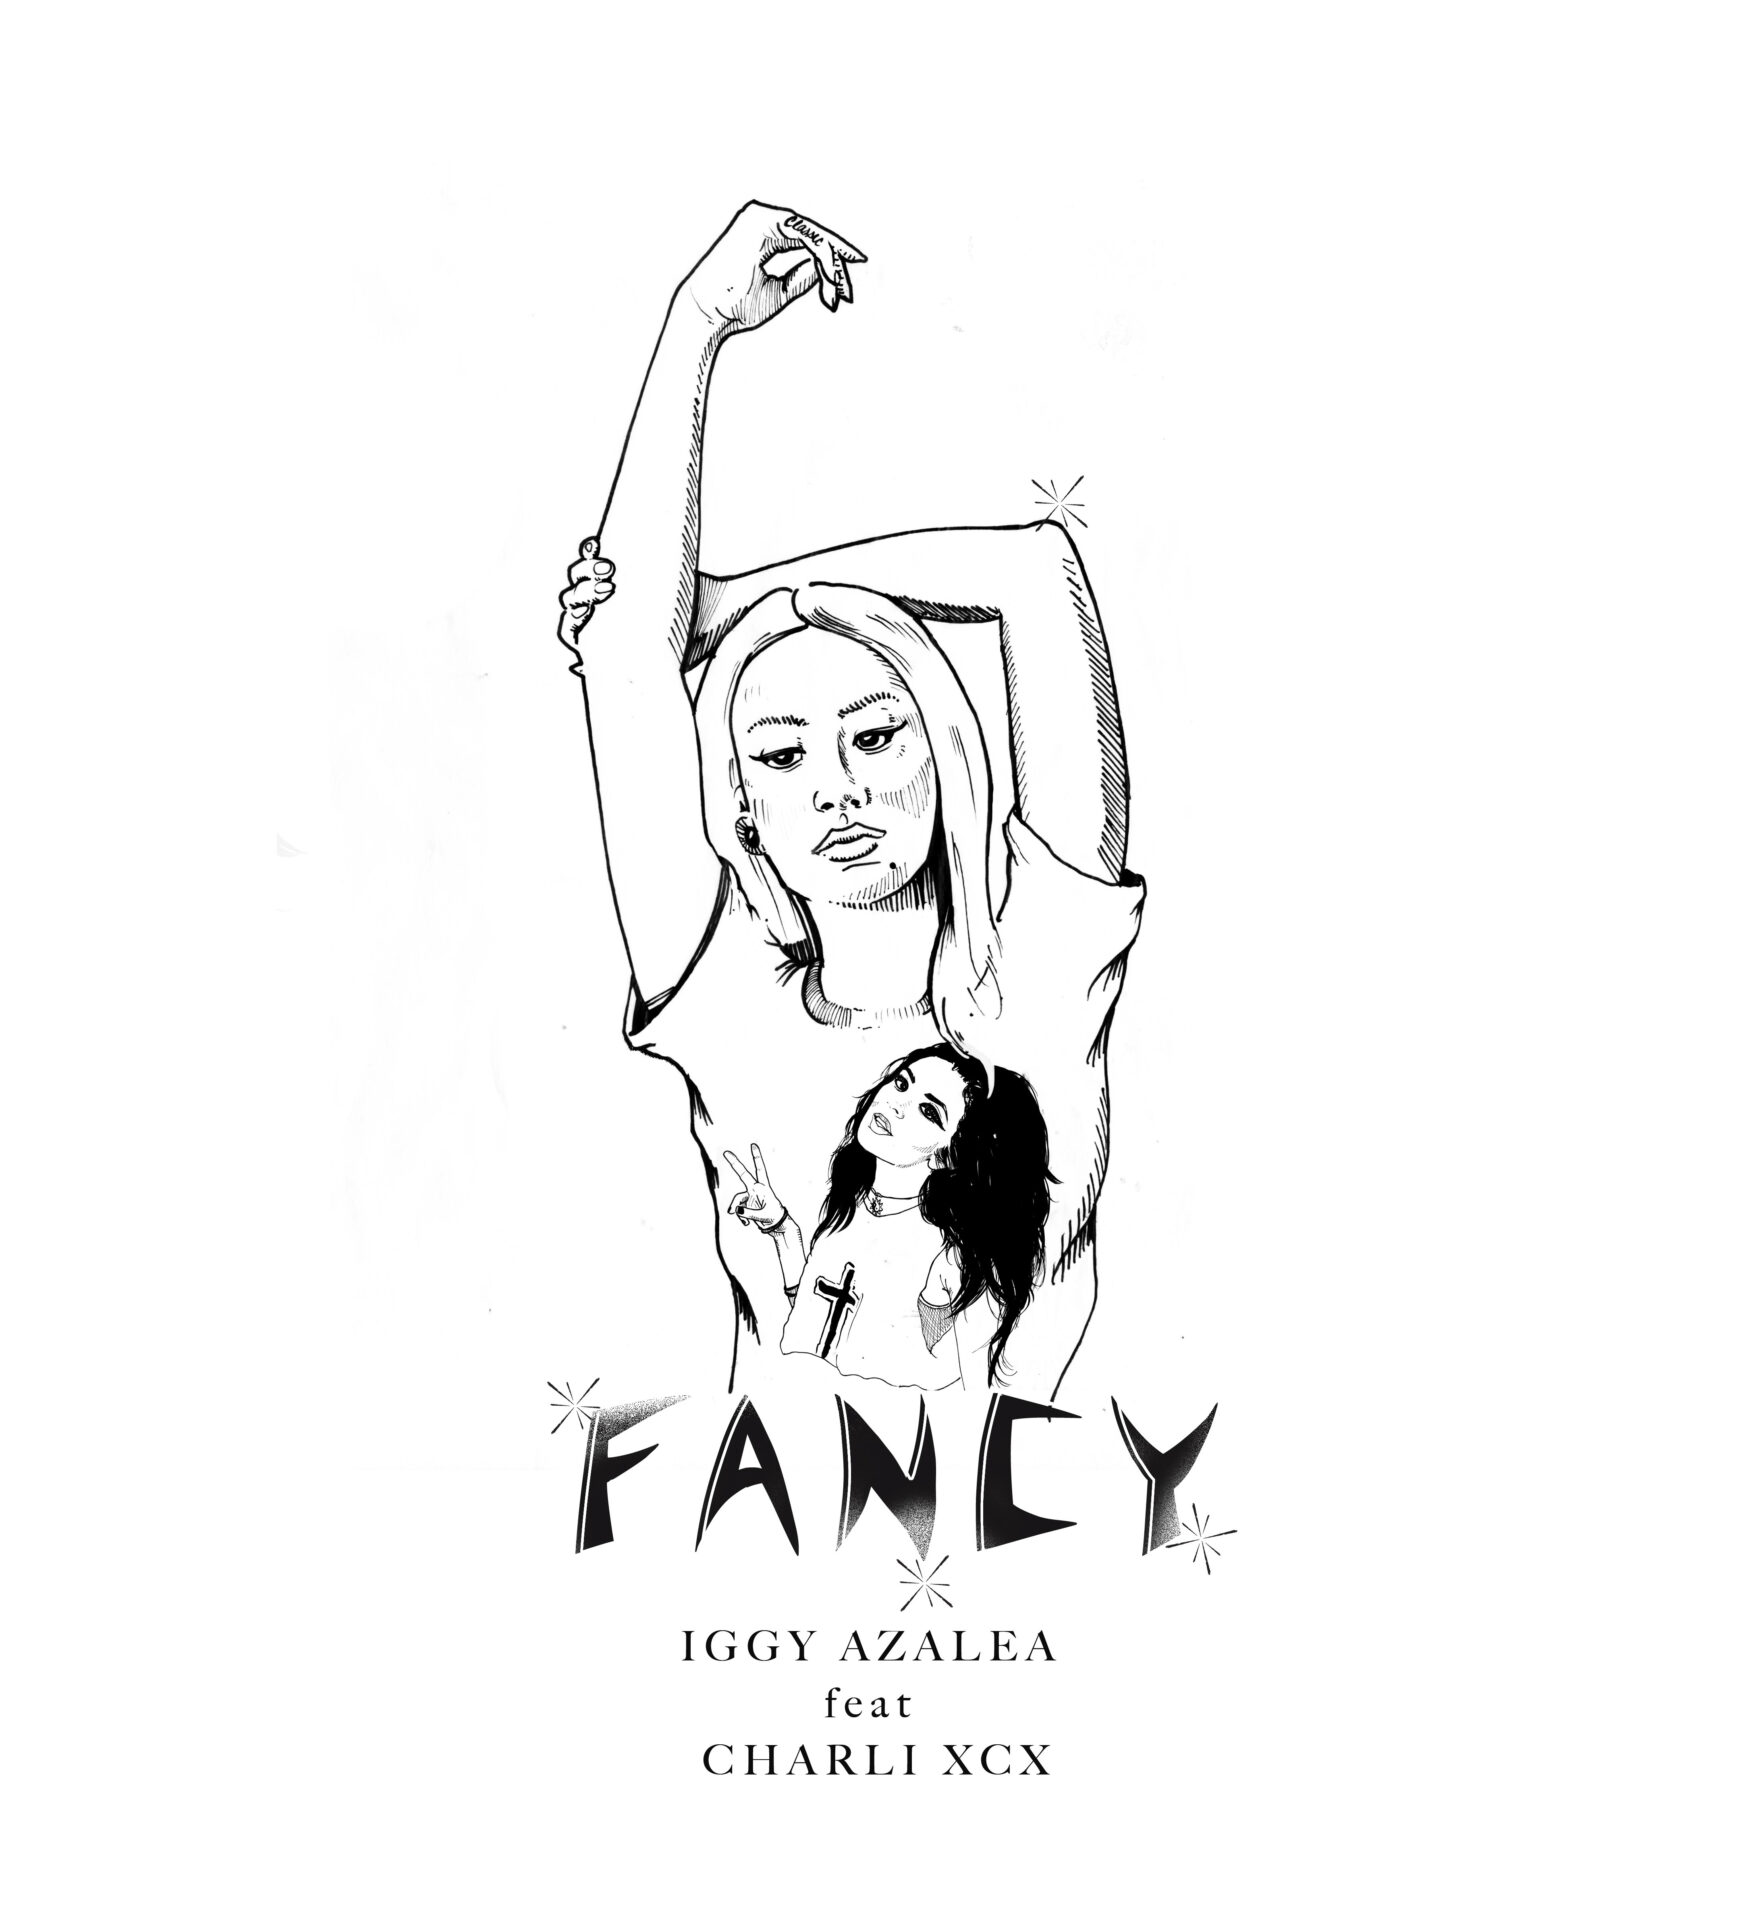 Track Of The Day #460: IGGY AZALEA - FANCY FT. CHARLI XCX 2